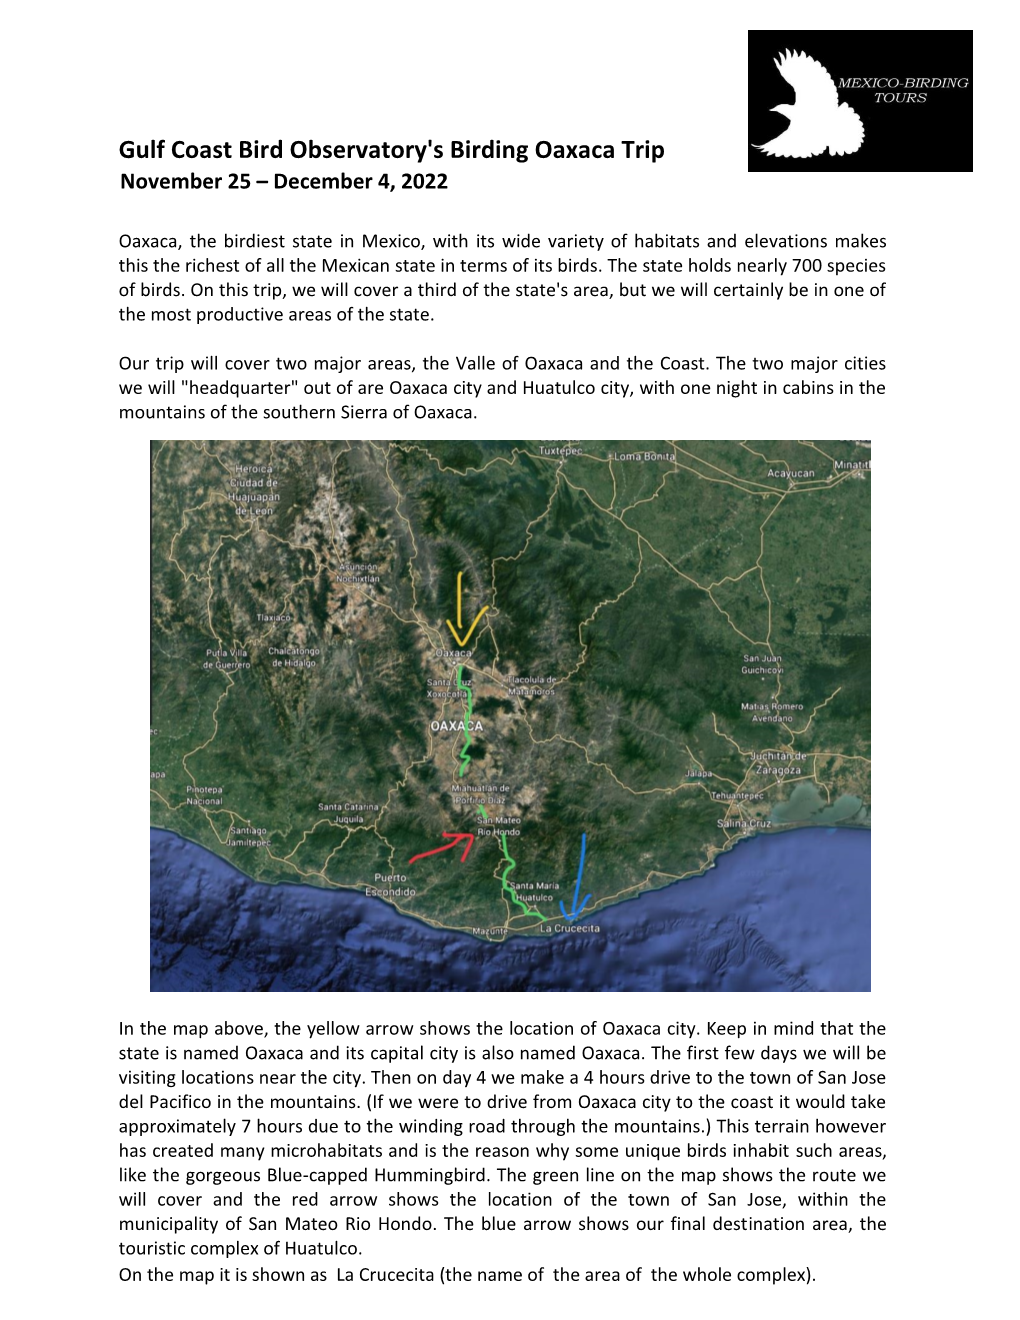 Gulf Coast Bird Observatory's Birding Oaxaca Trip November 25 – December 4, 2022